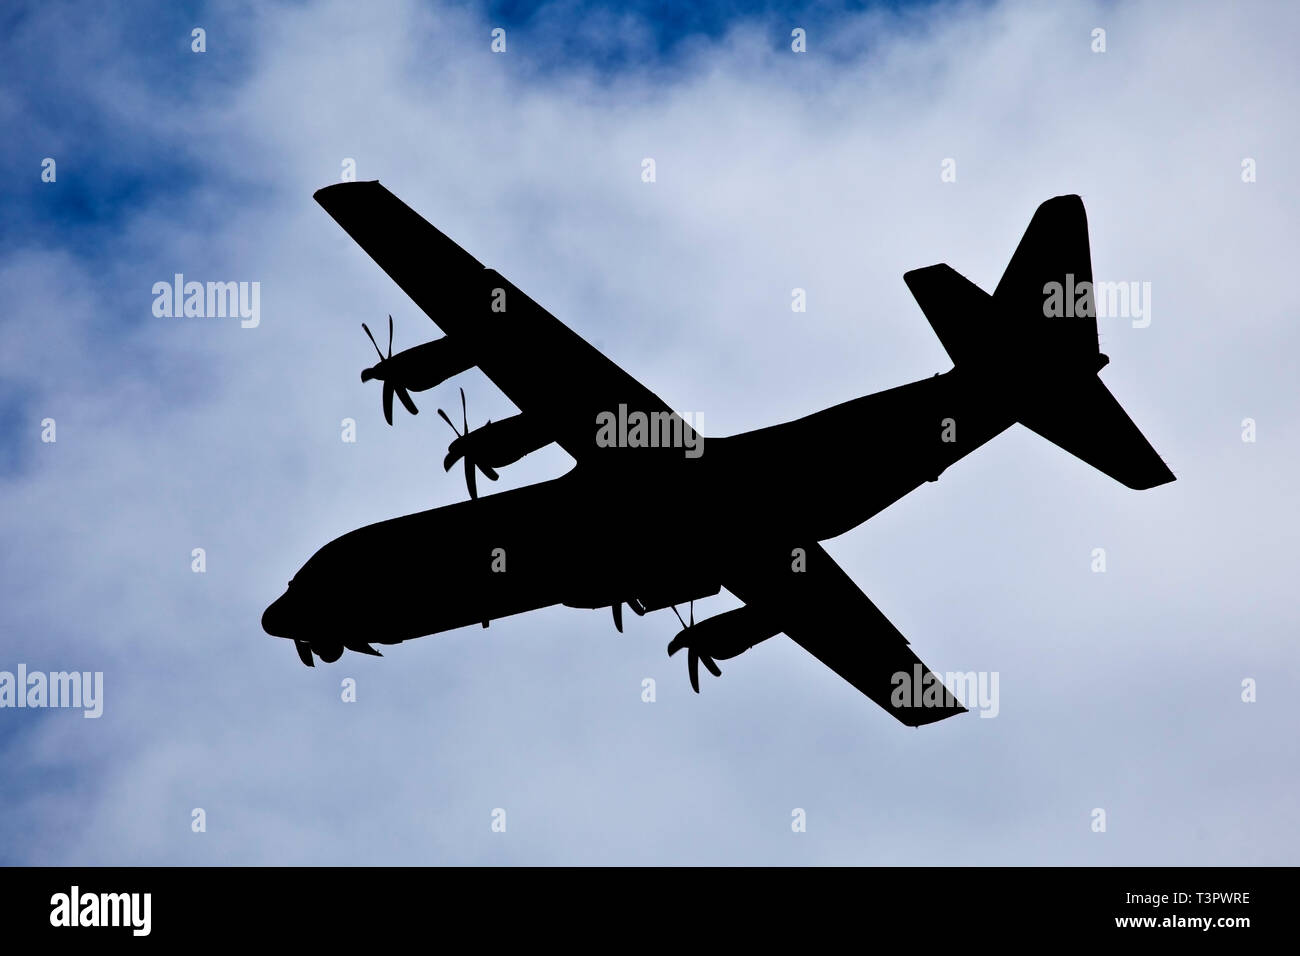 Sillohette of a C130 ( Hercules) military transport aircraft. Stock Photo